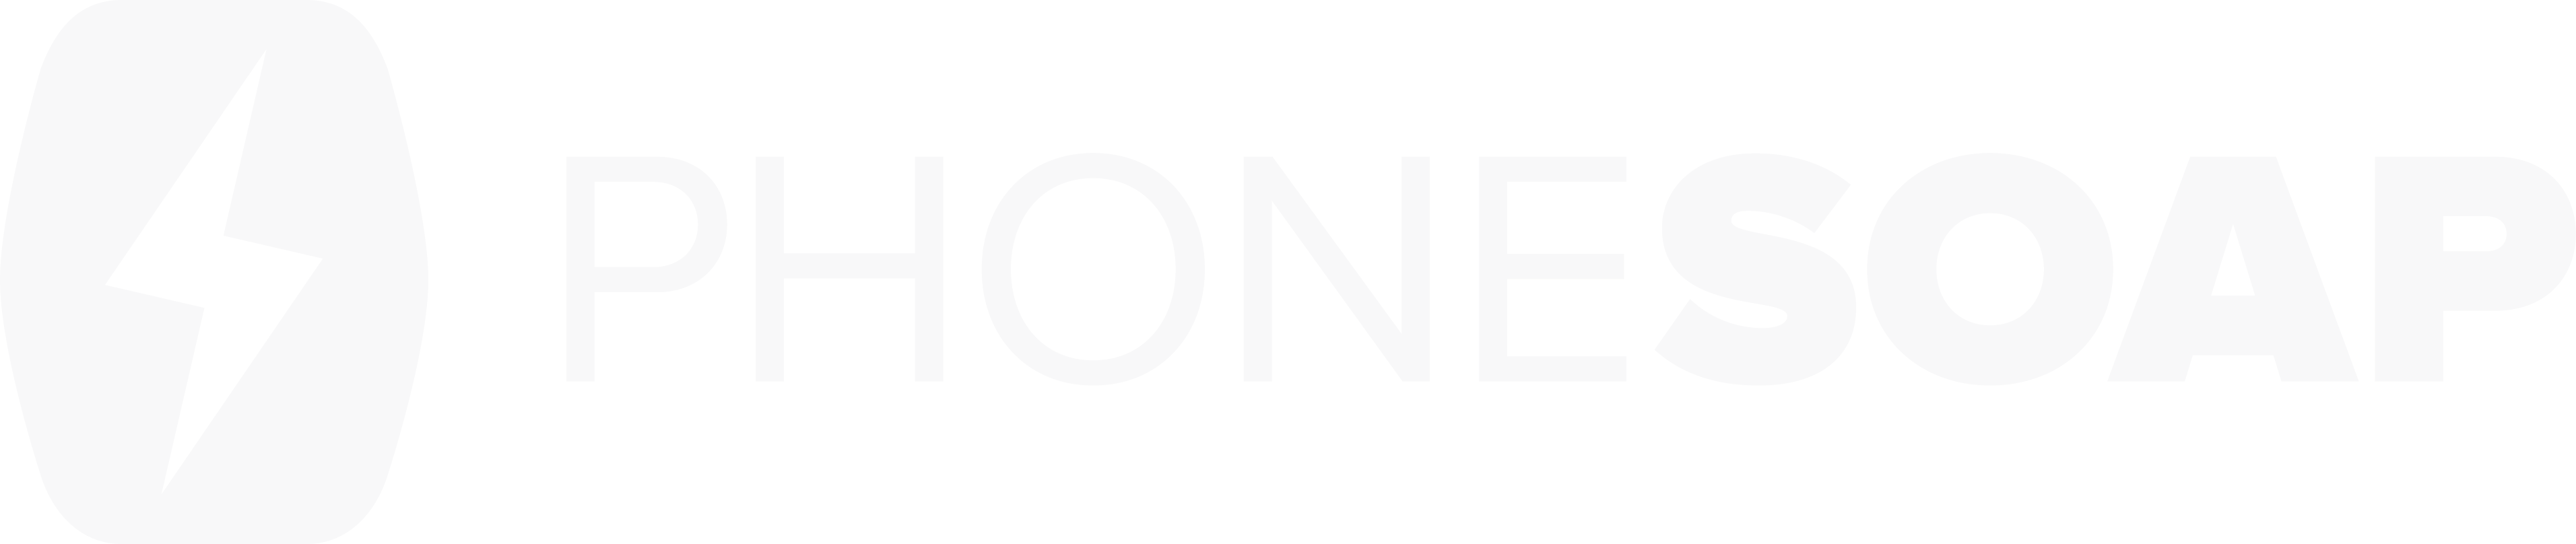 phonesoap-main logo